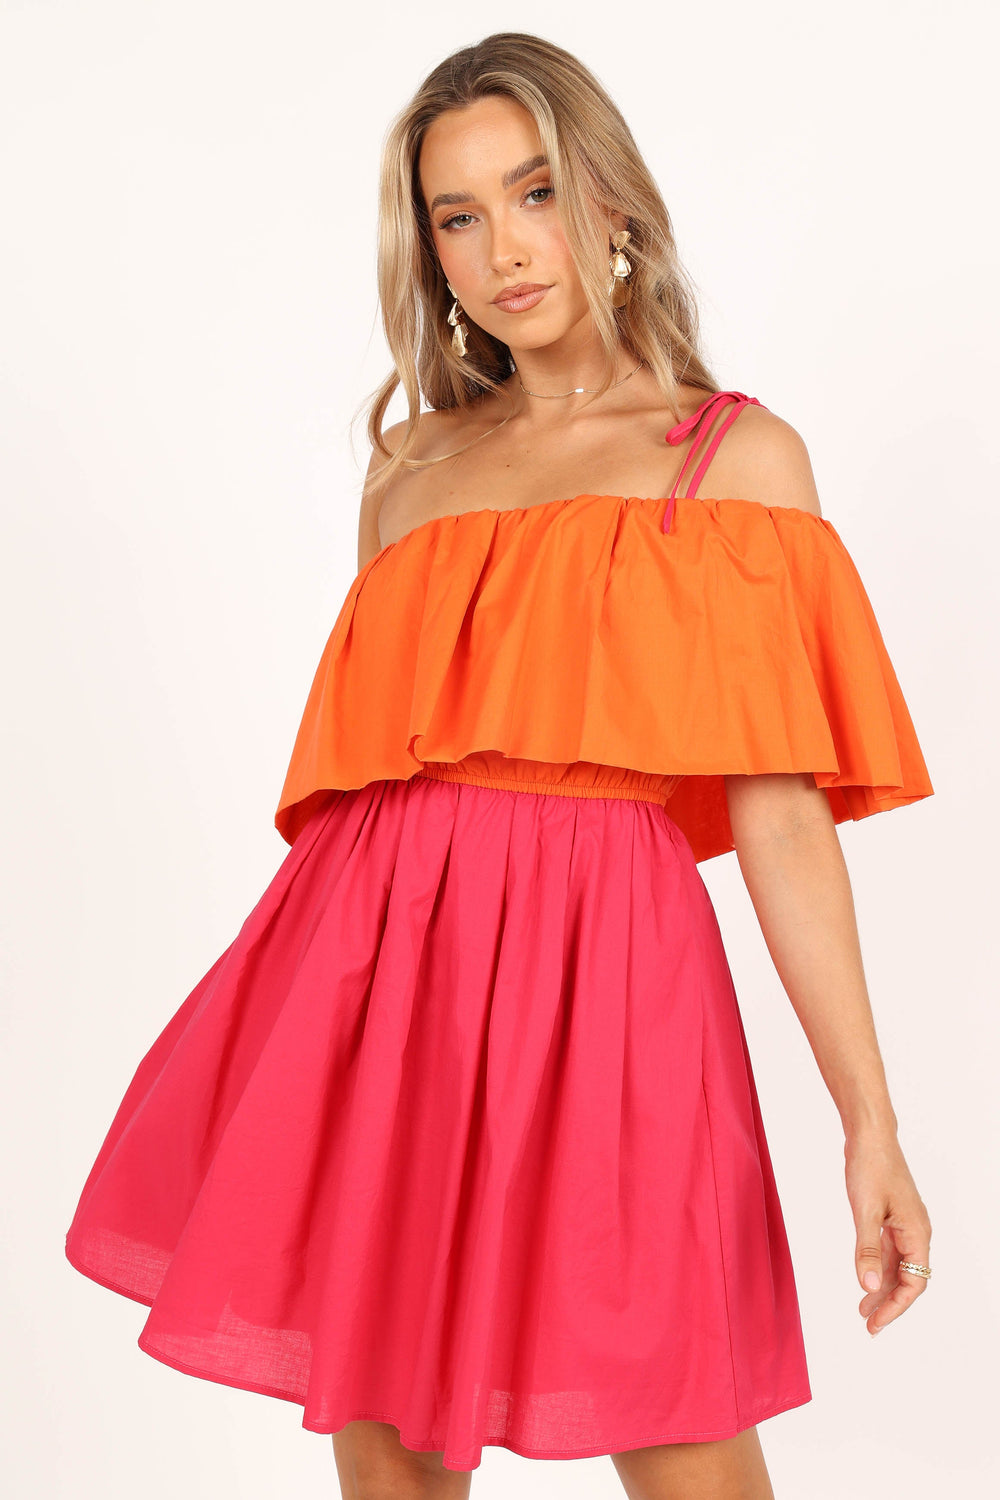 Maeva One Shoulder Mini Dress Petal Pink/Orange - Pup - USA 